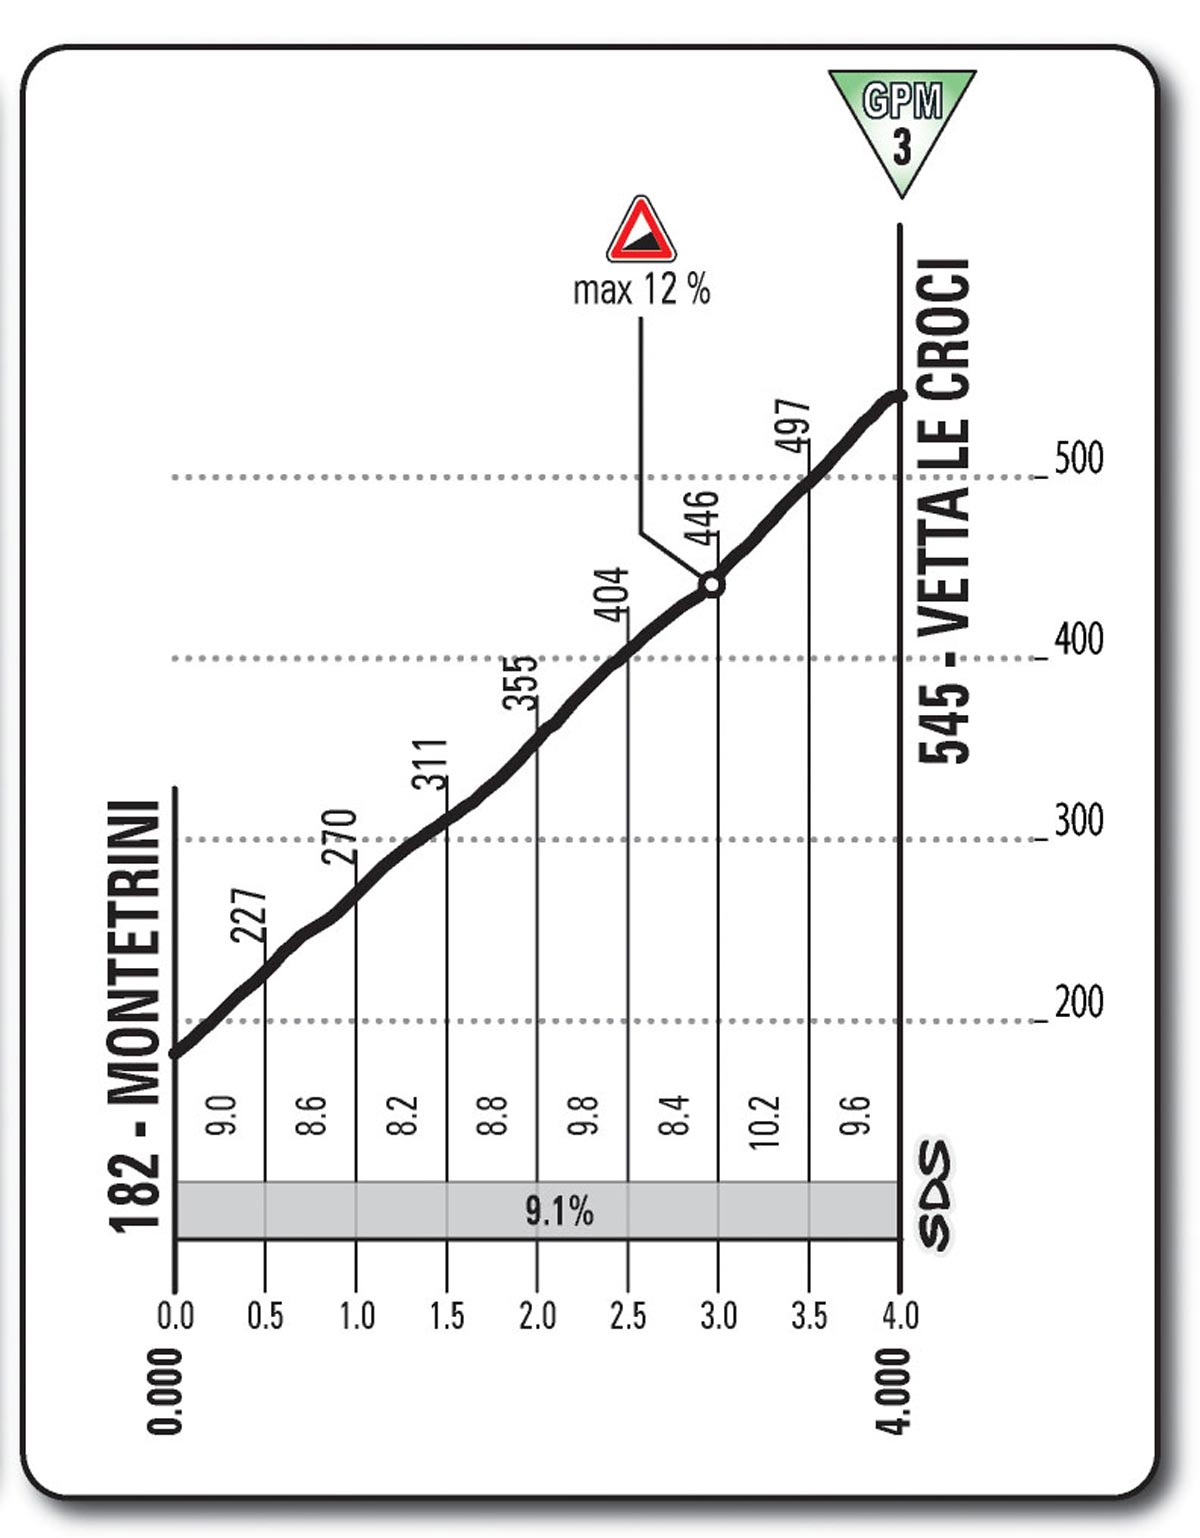 Giro d'Italia 2013 Stage 9 climb details (Vetta le Croci)